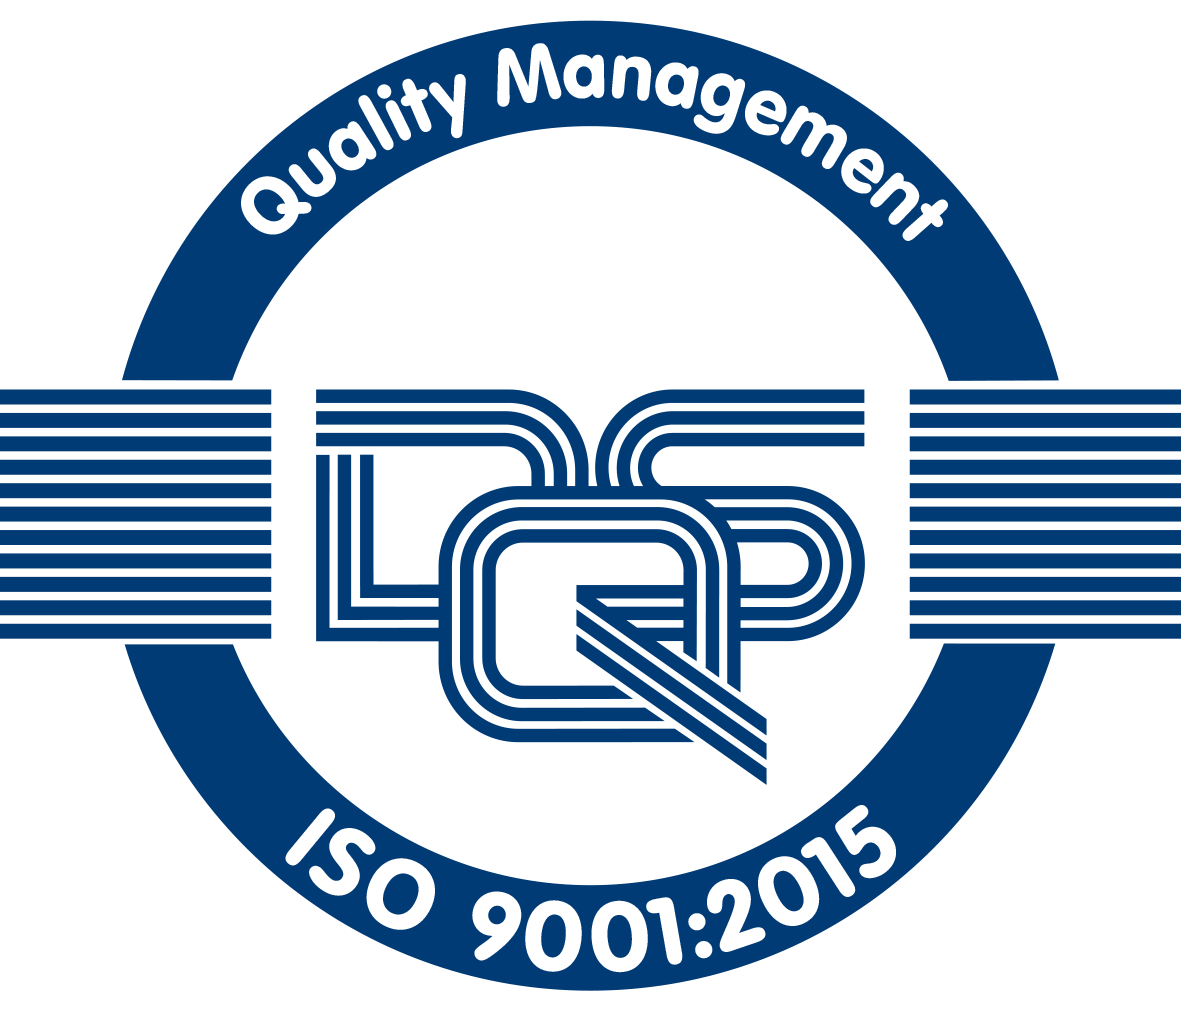 DQS_Certificate_Symbols_ISO9001_2015